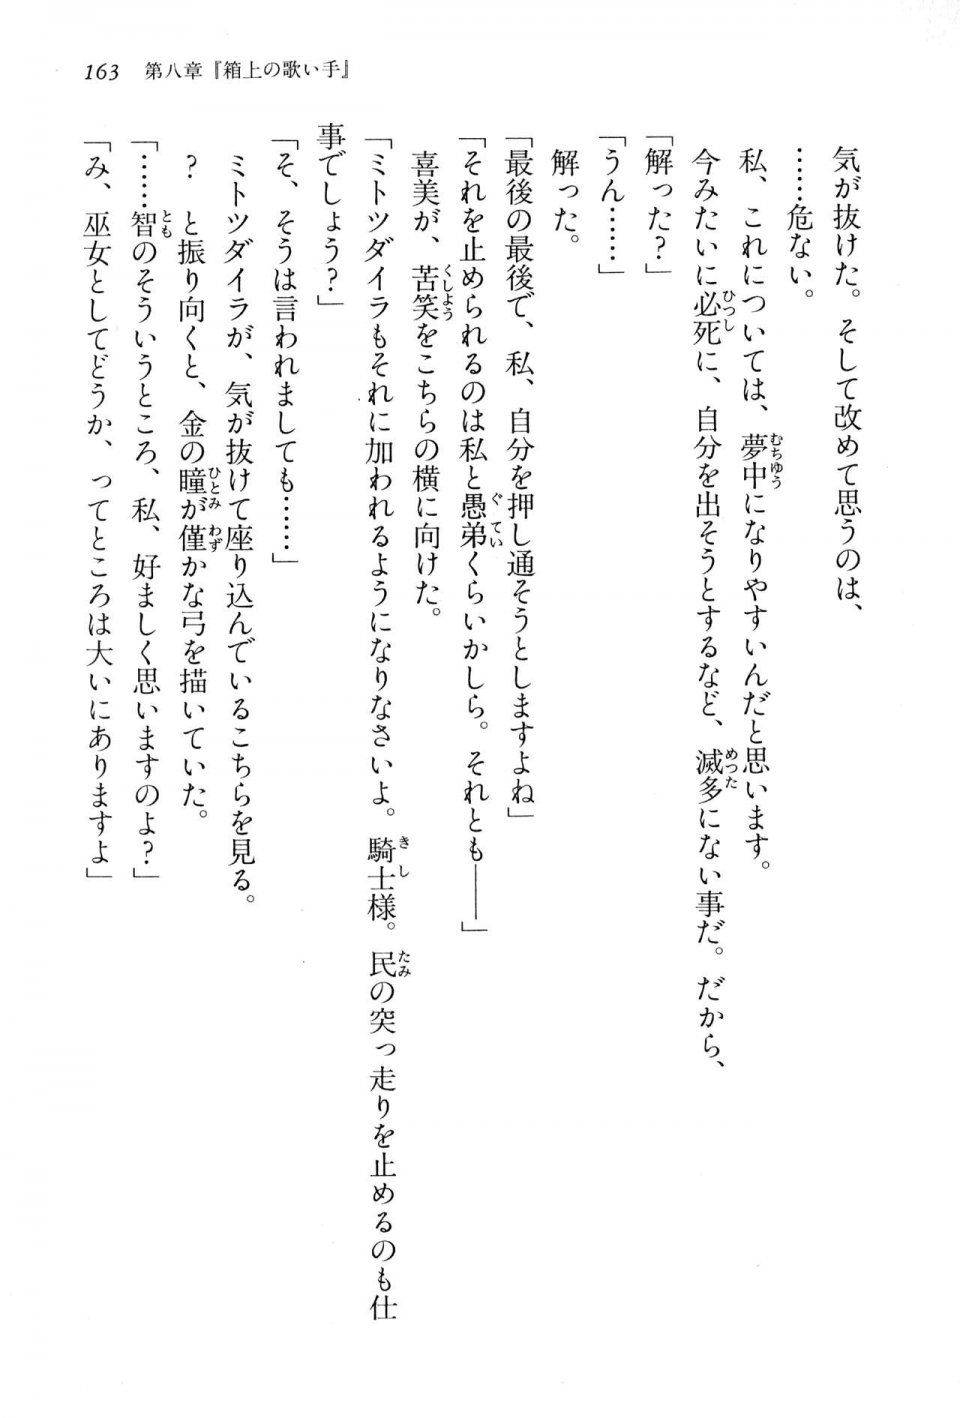 Kyoukai Senjou no Horizon BD Special Mininovel Vol 2(1B) - Photo #167